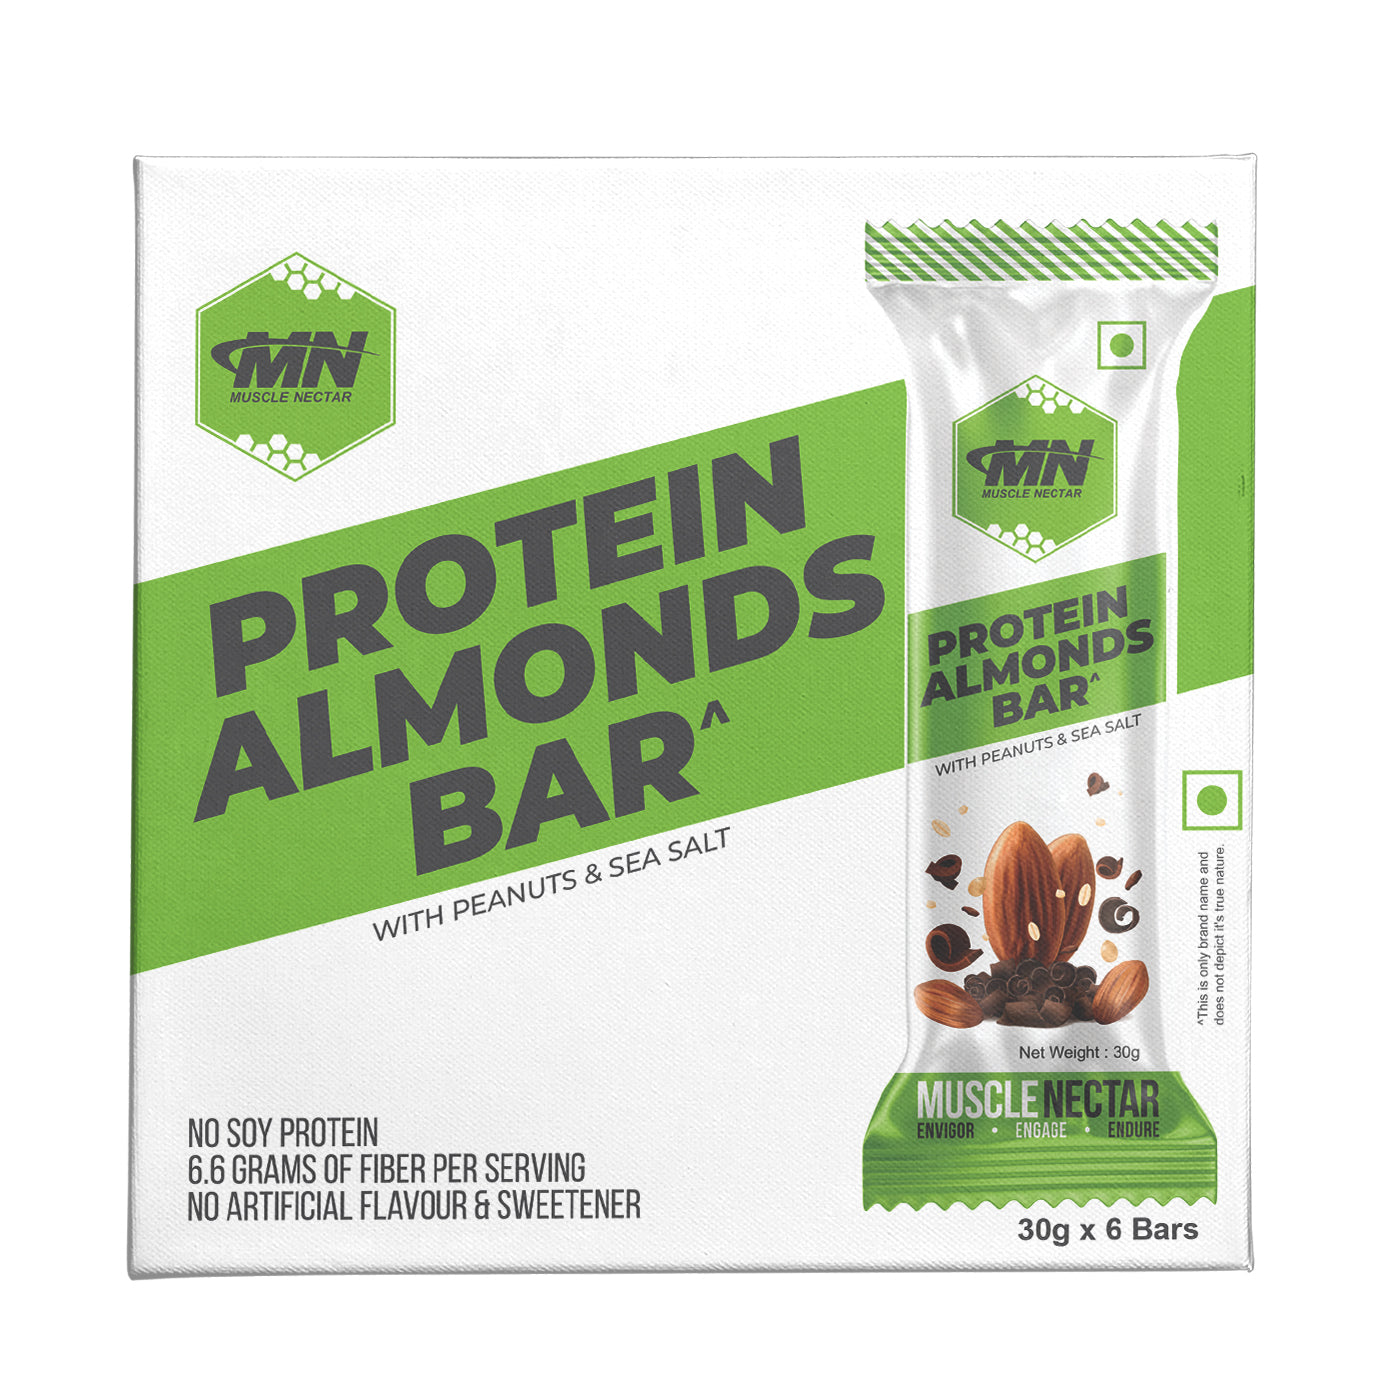 Protein Almonds Bar with Peanuts & Sea Salt